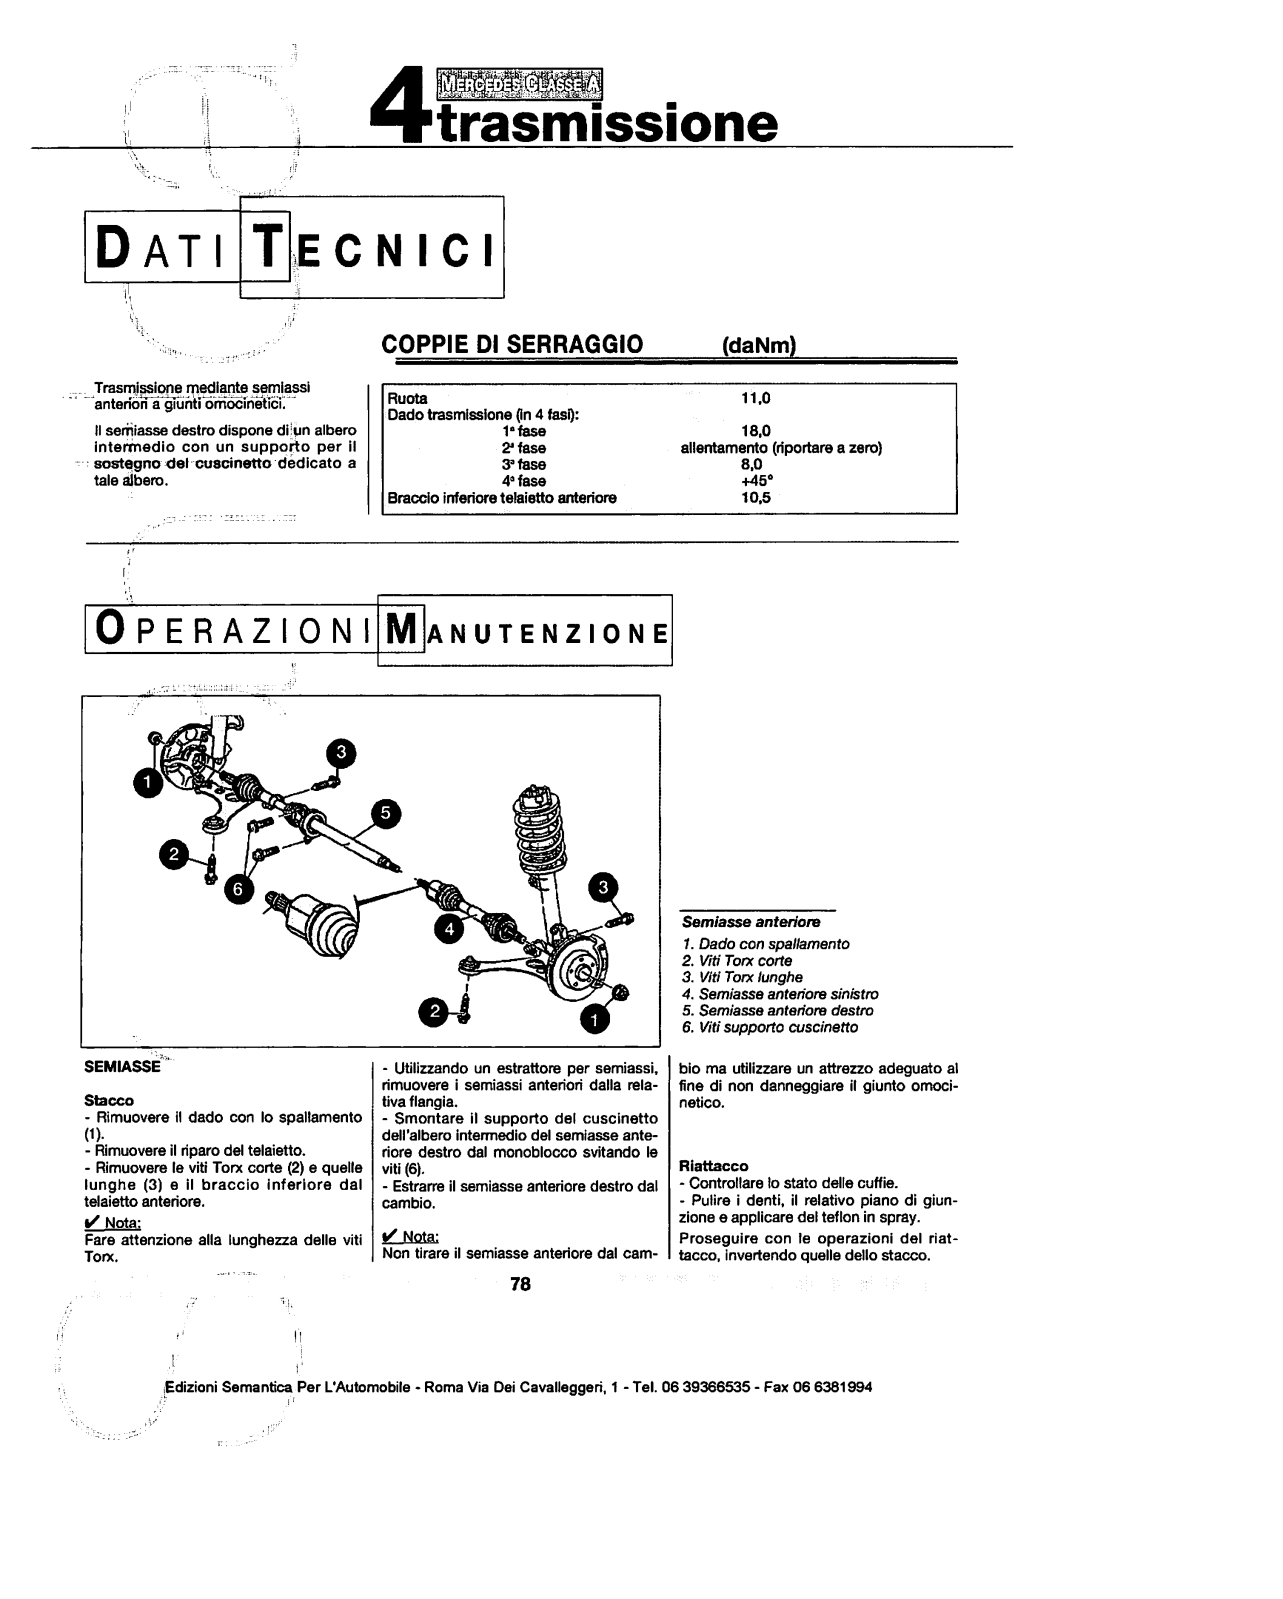 w168 - (W168): Manual técnico - tudo sobre - 1997 a 2004 - italiano 5d0zgx